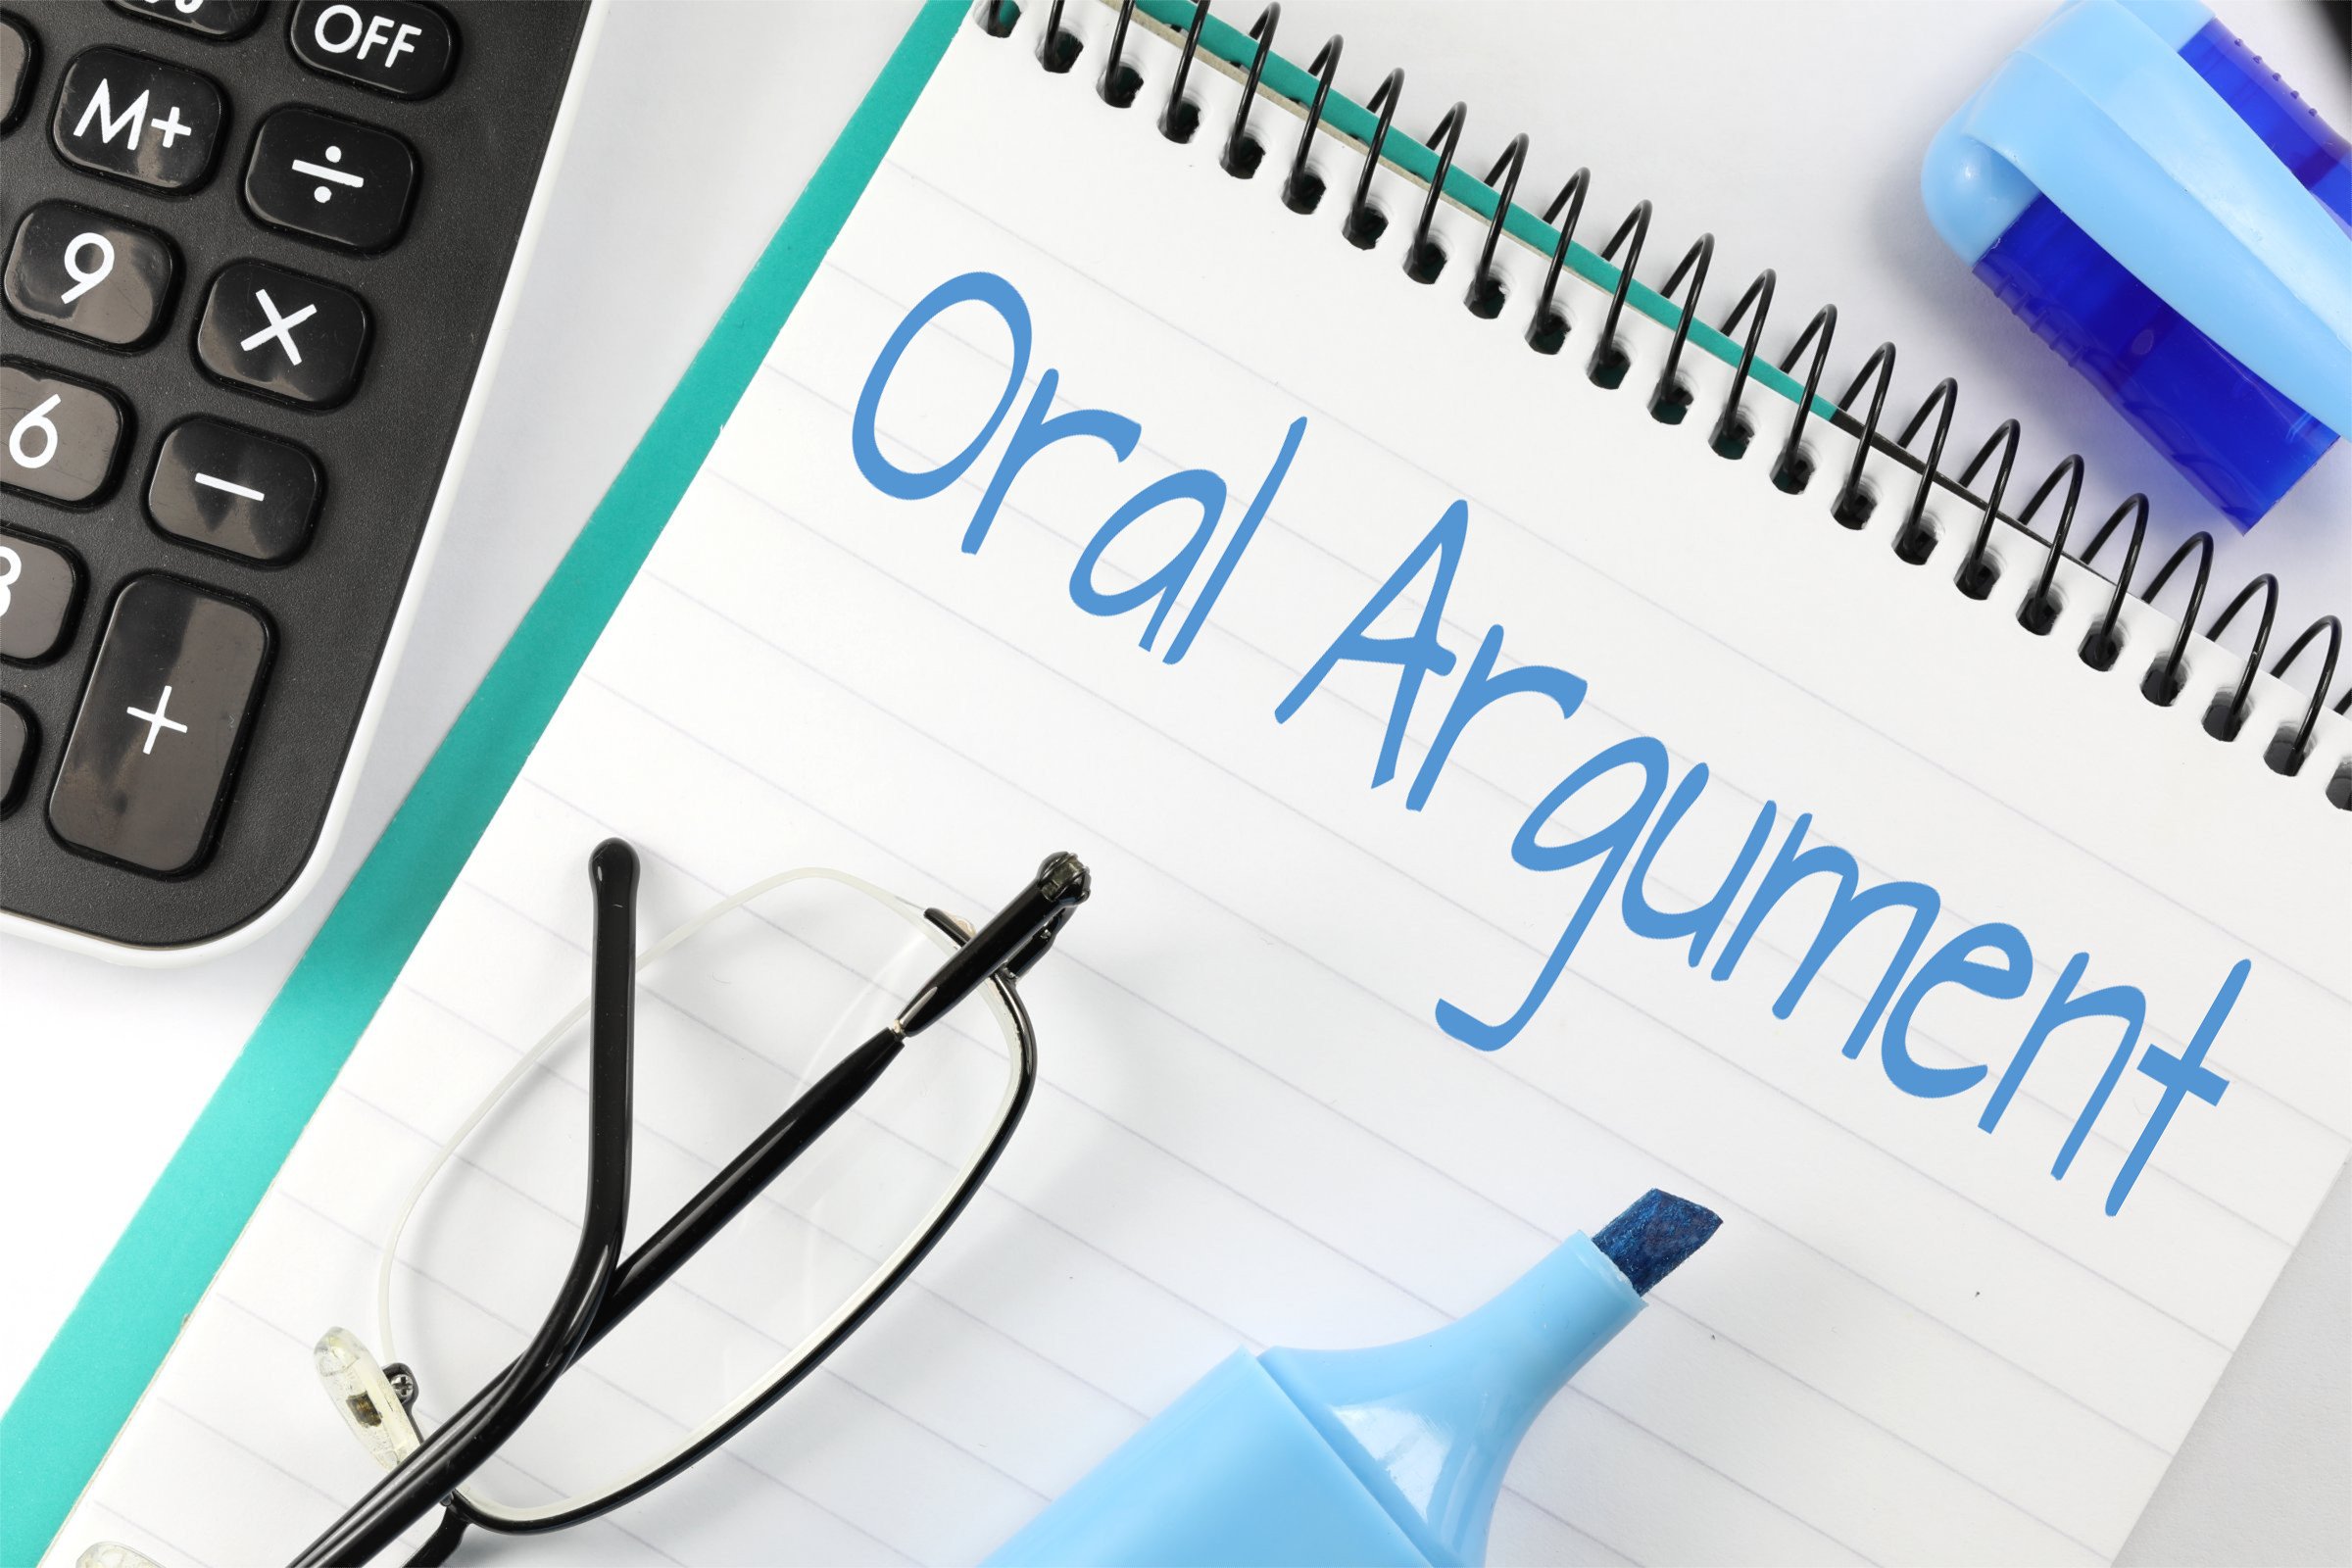 oral argument